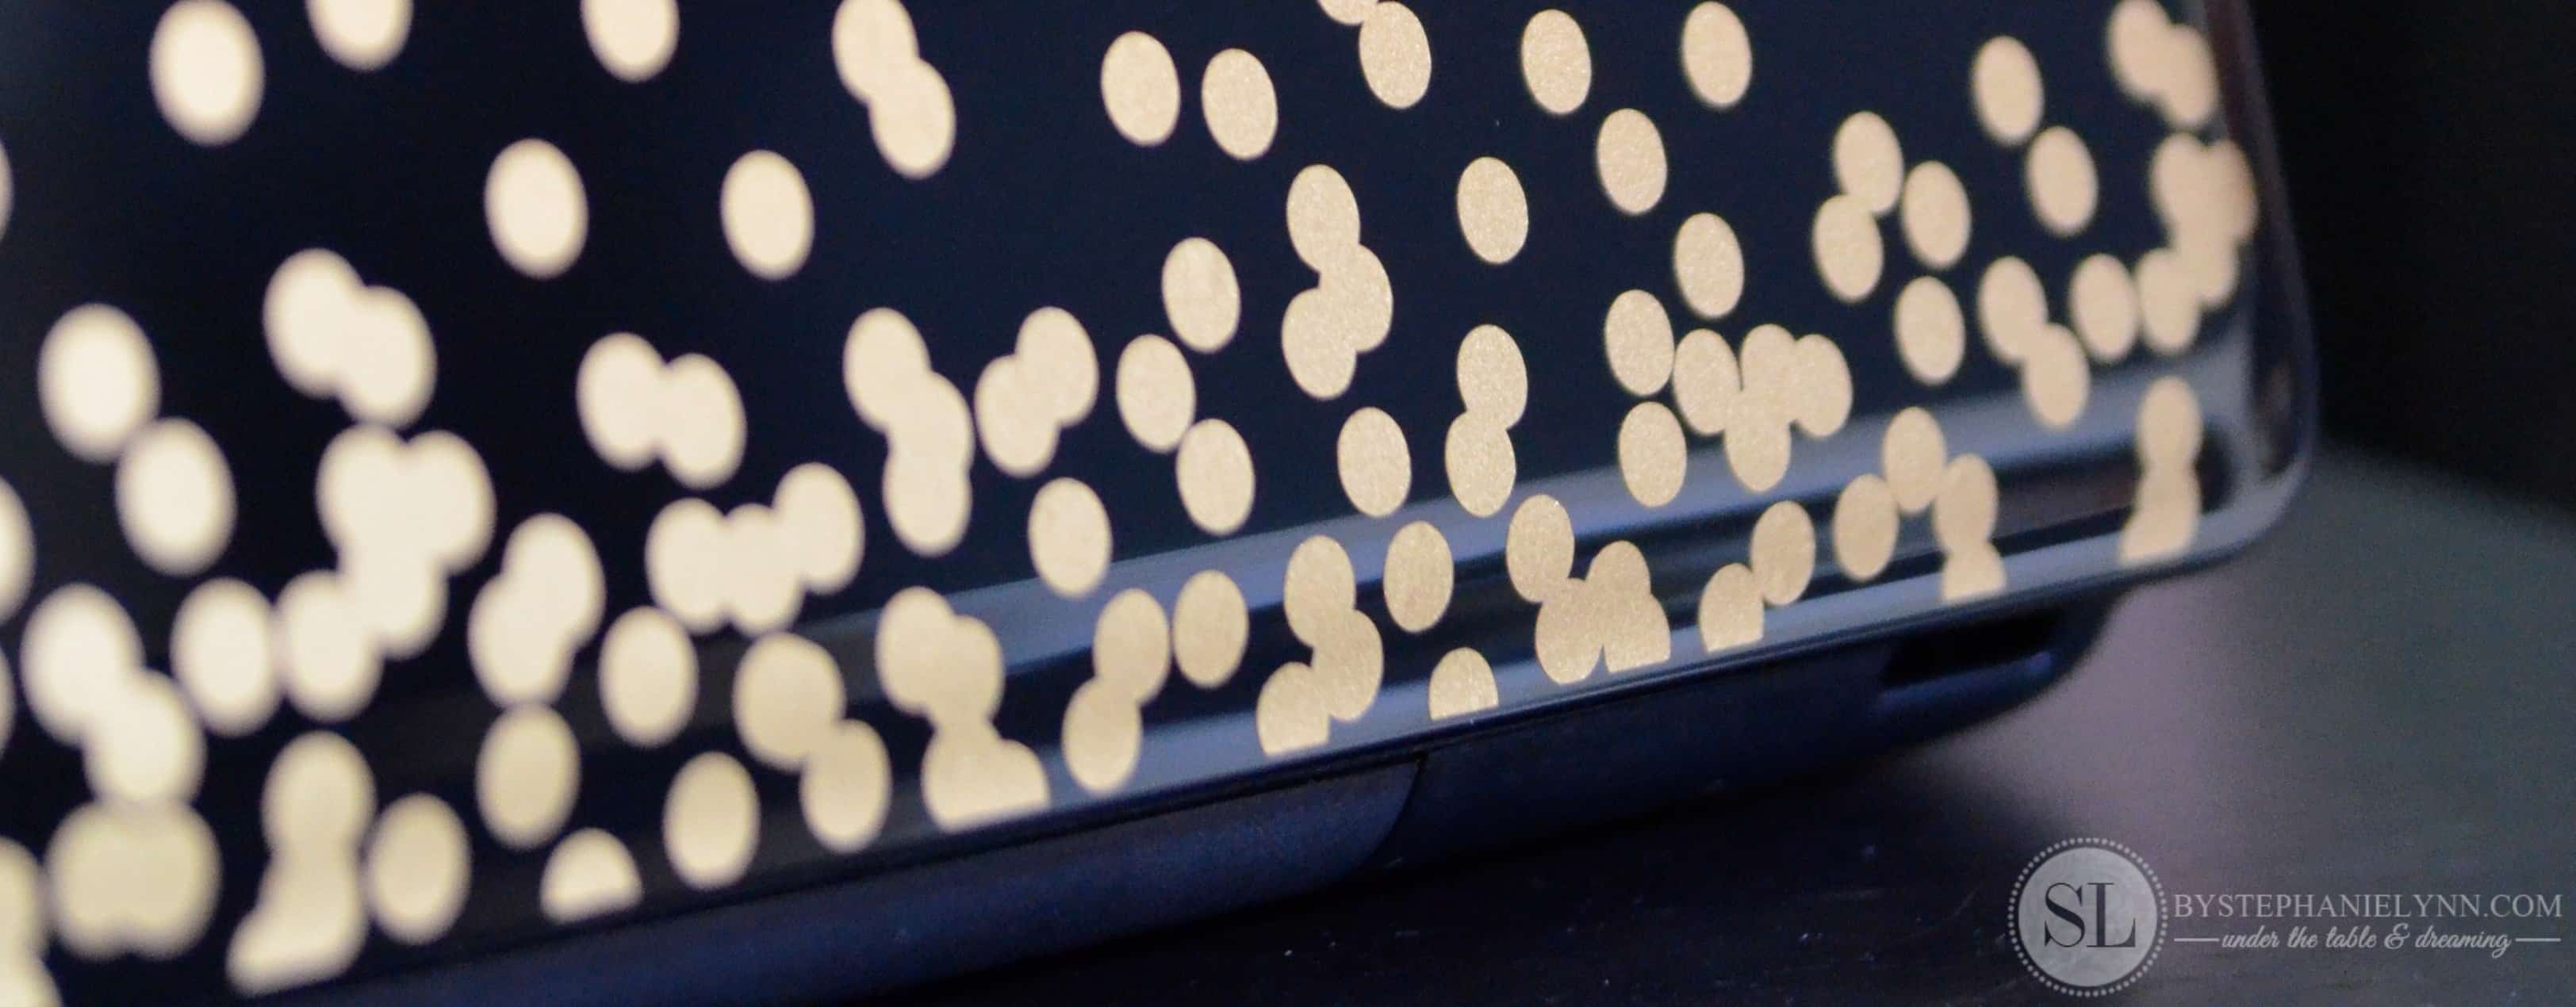 Vinyl sparkle dots DIY laptop skin